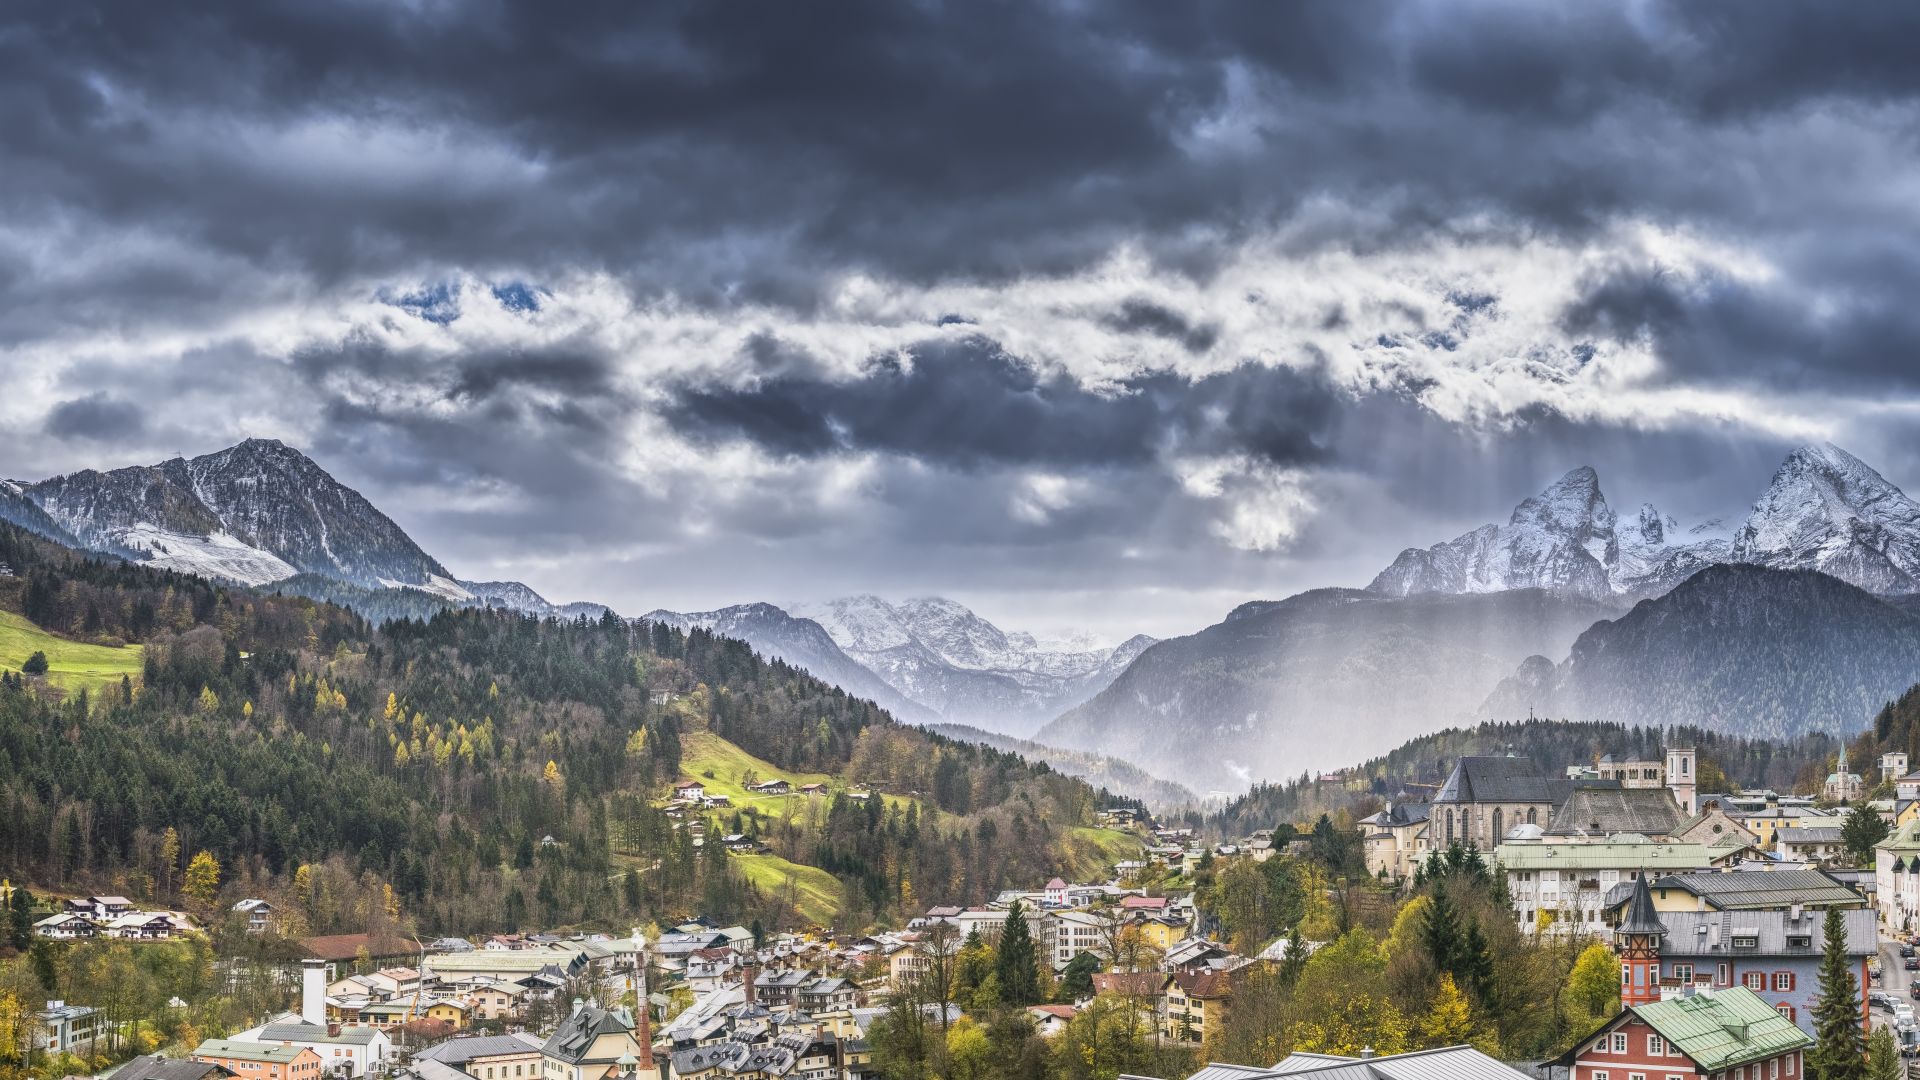 Alps, Switzerland, Europe, mountains, trees, sky, clouds, 8k (horizontal)